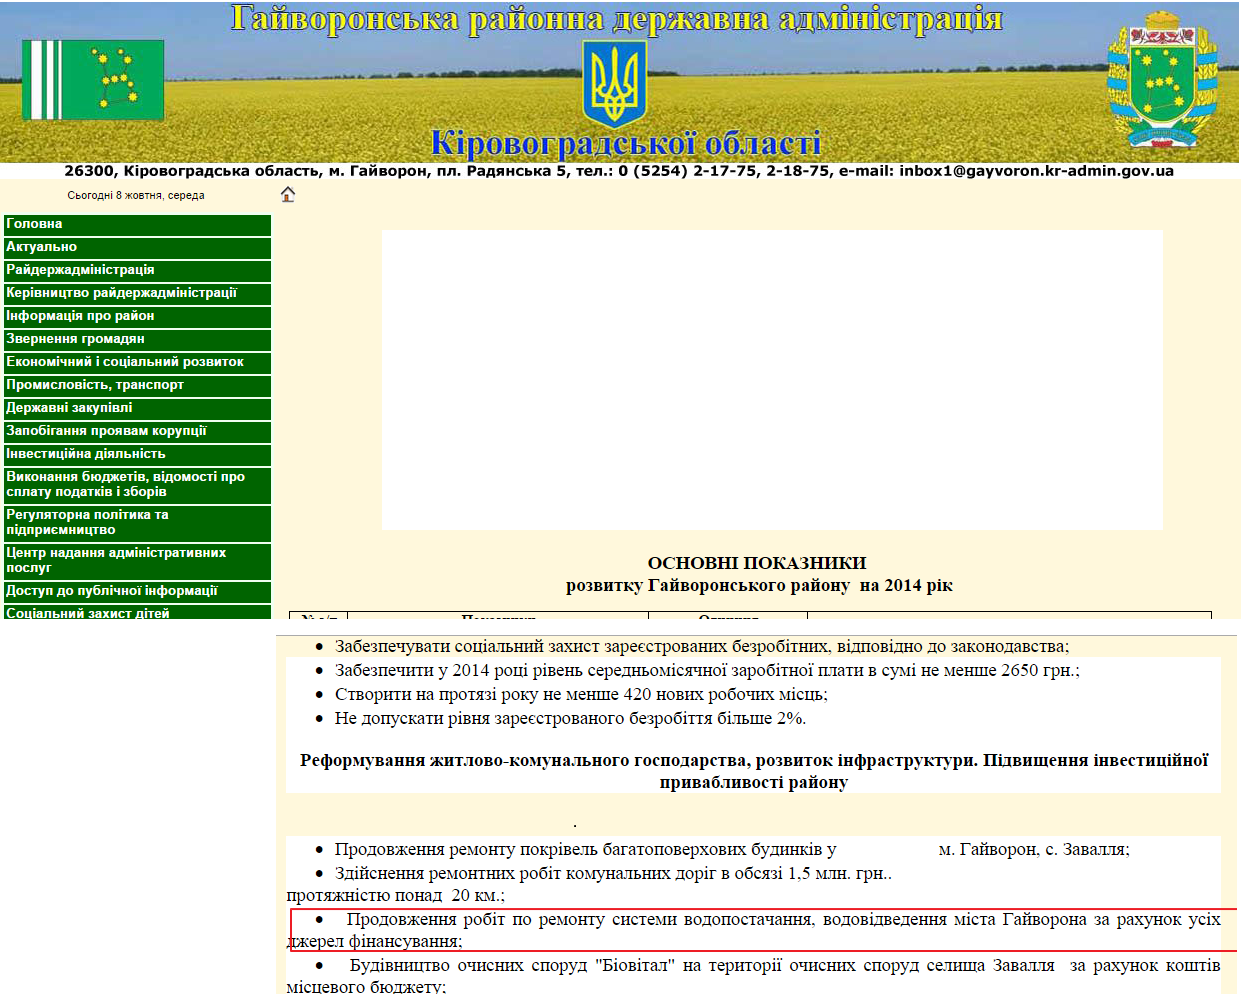 http://gayvoron.kr-admin.gov.ua/index.php?q=Bydg/programa-2014.htm